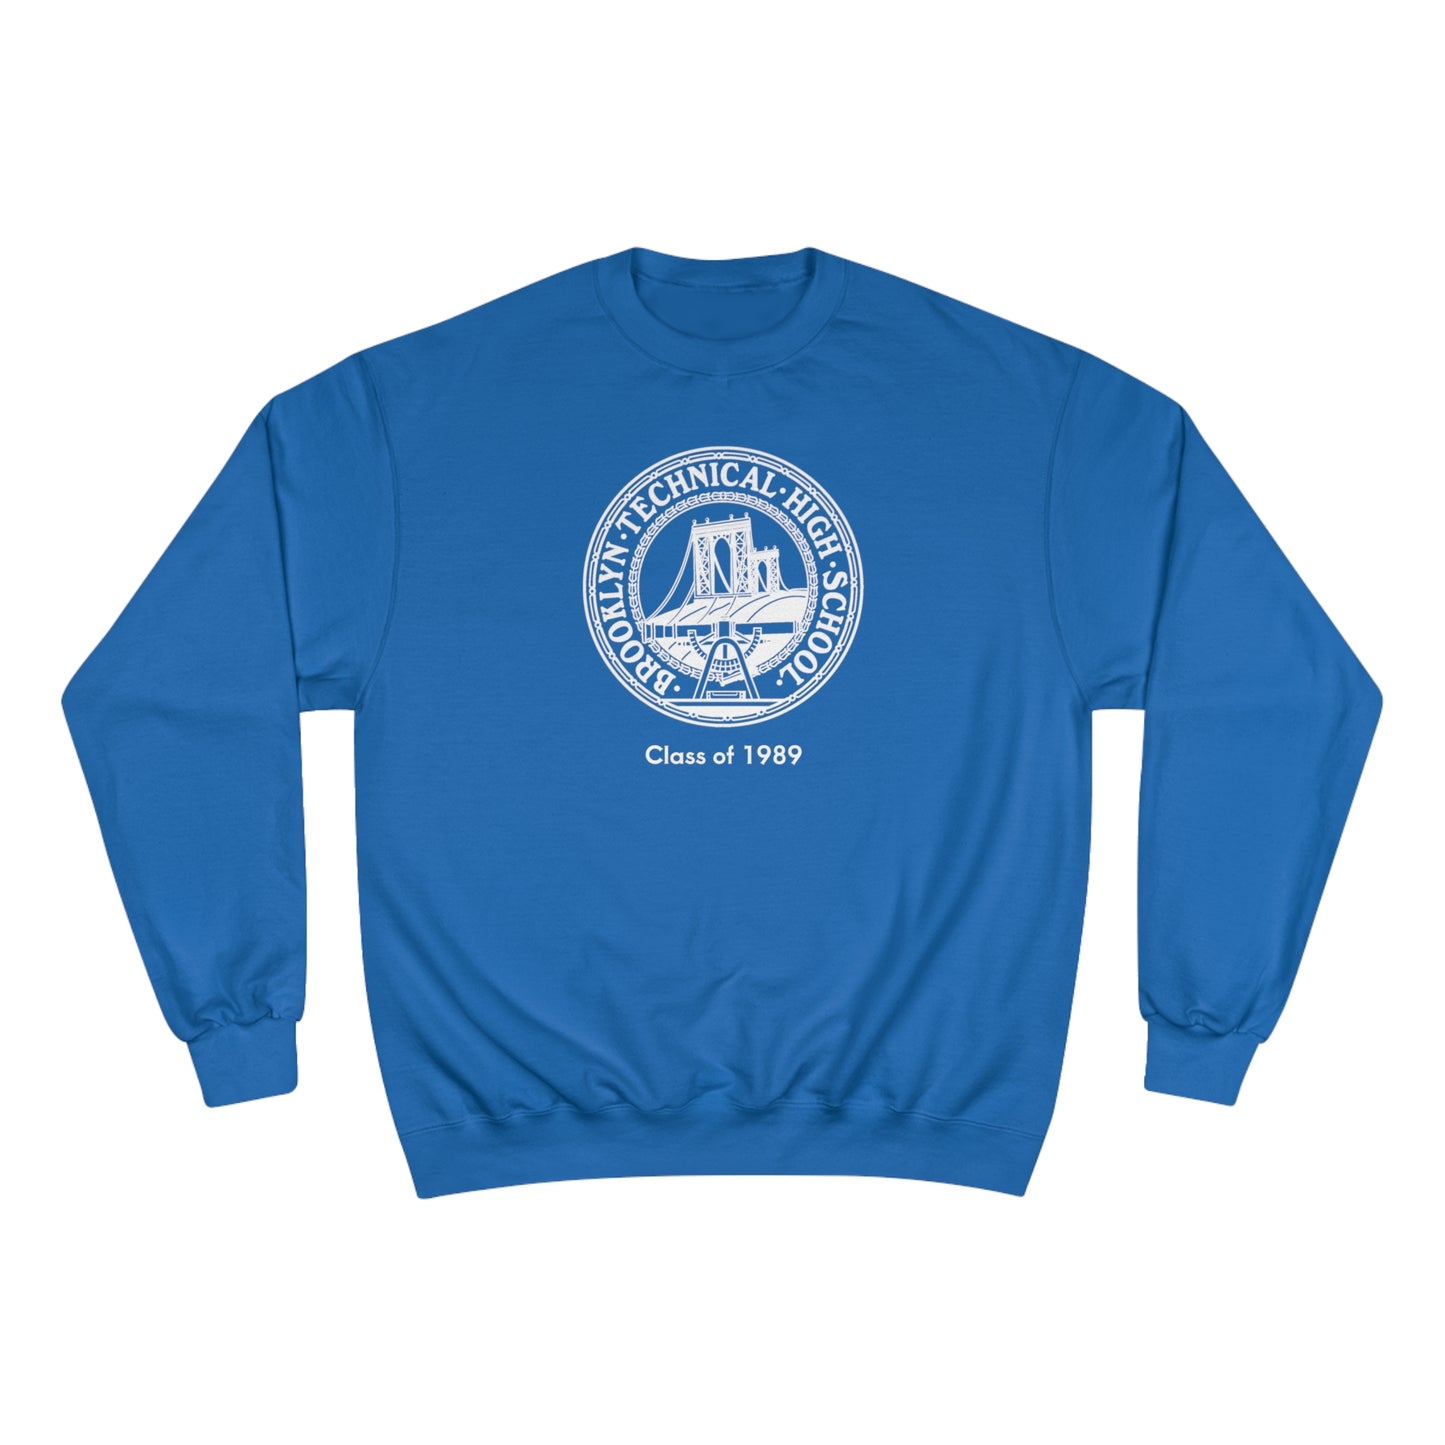 Classic Tech Seal - Champion Crewneck Sweatshirt - Class Of 1989